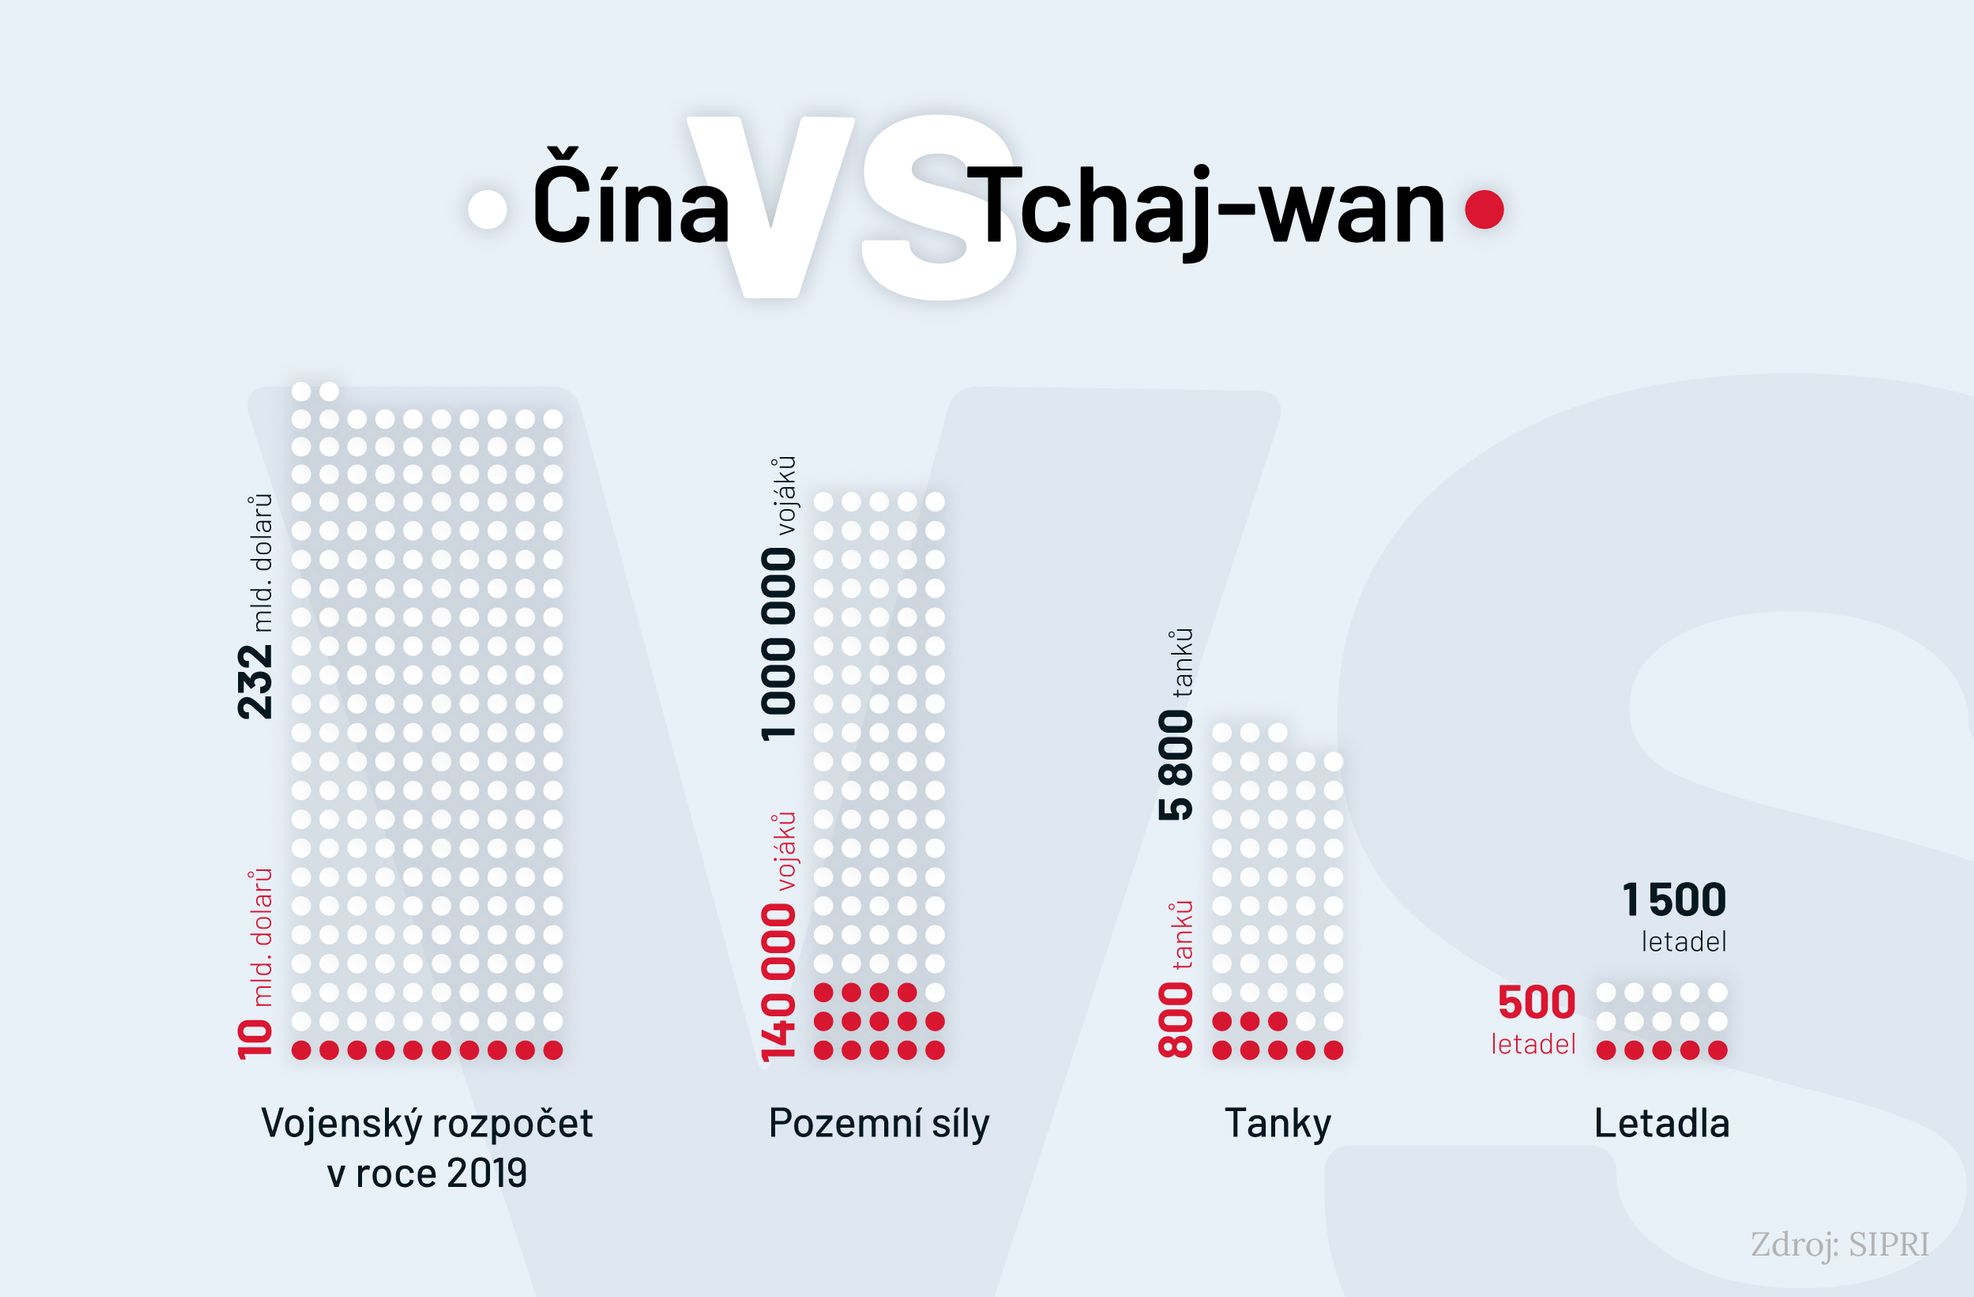 čína vs tchaj-wan